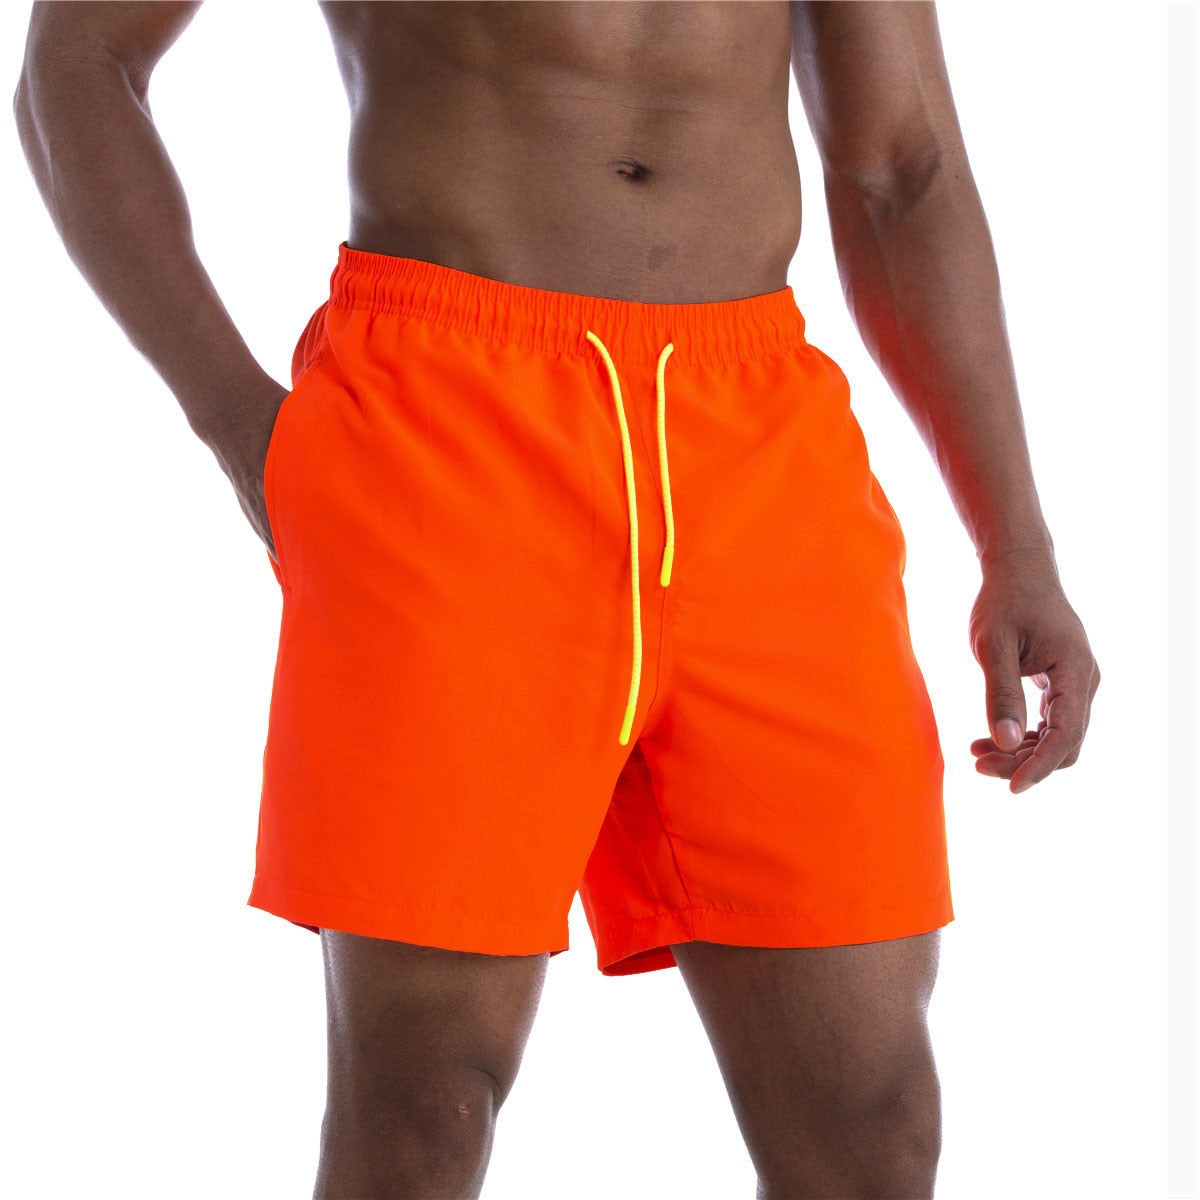 Comprar orange02 Swimming Shorts for Men elastic waist and drawstring